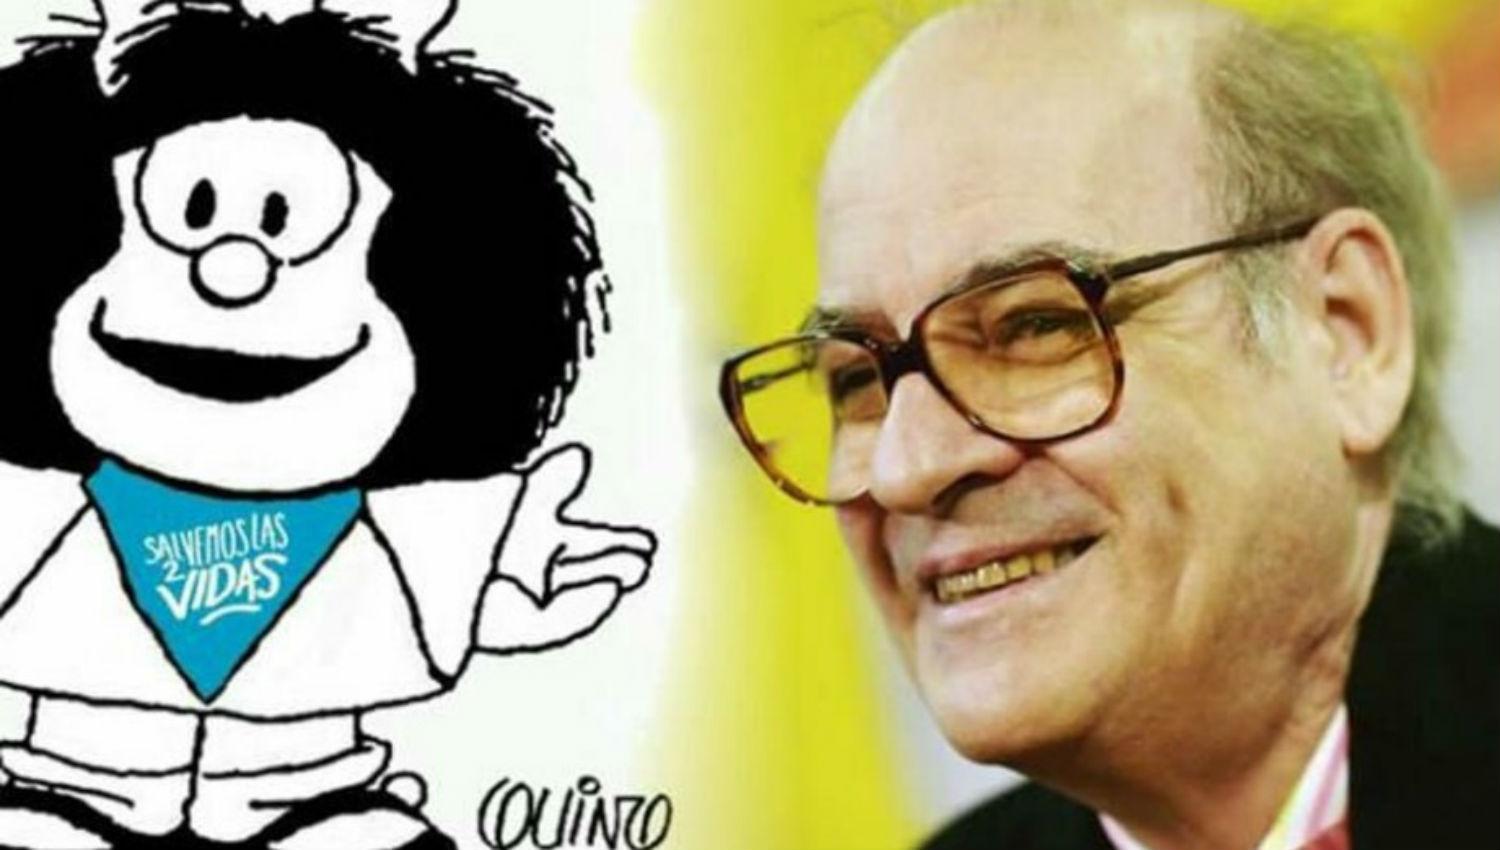 Quino repudió la imagen de Mafalda con pañuelo celeste